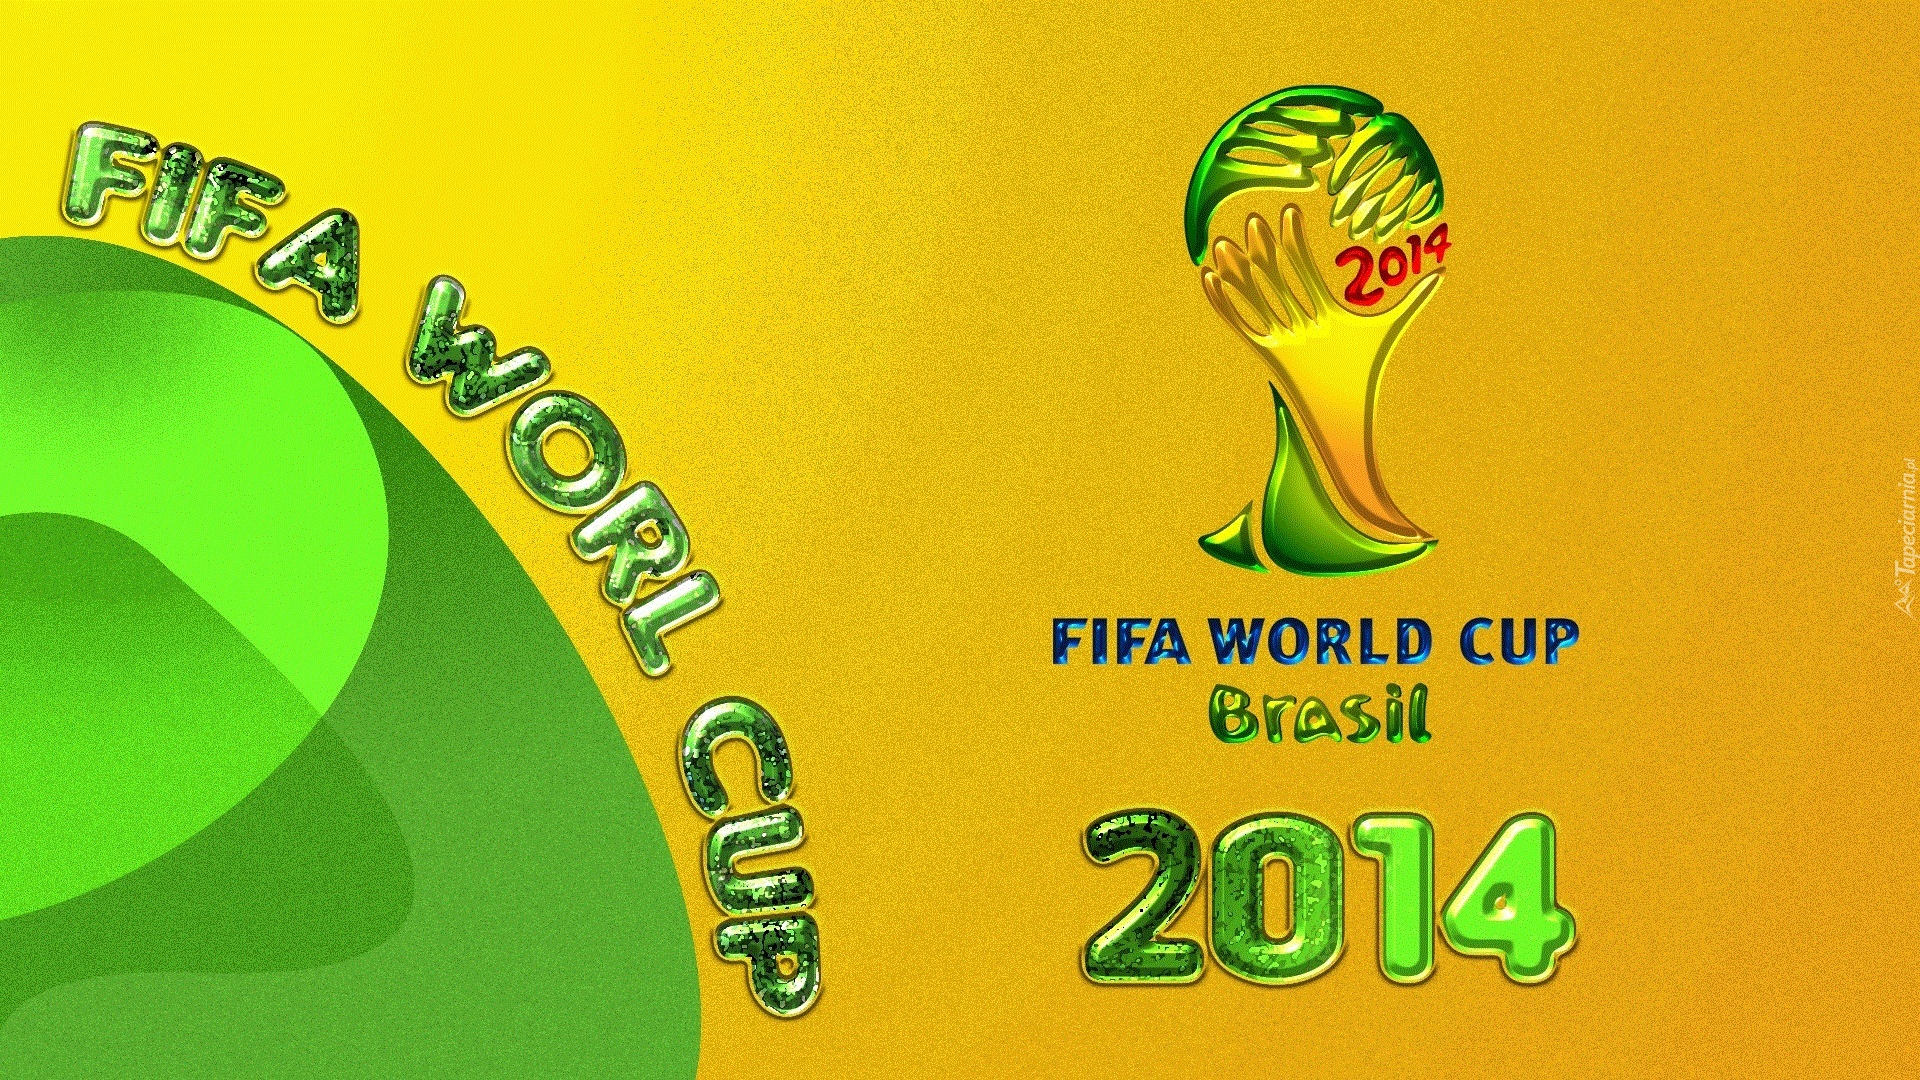 Mistrzostwa Świata, 2014, Puchar